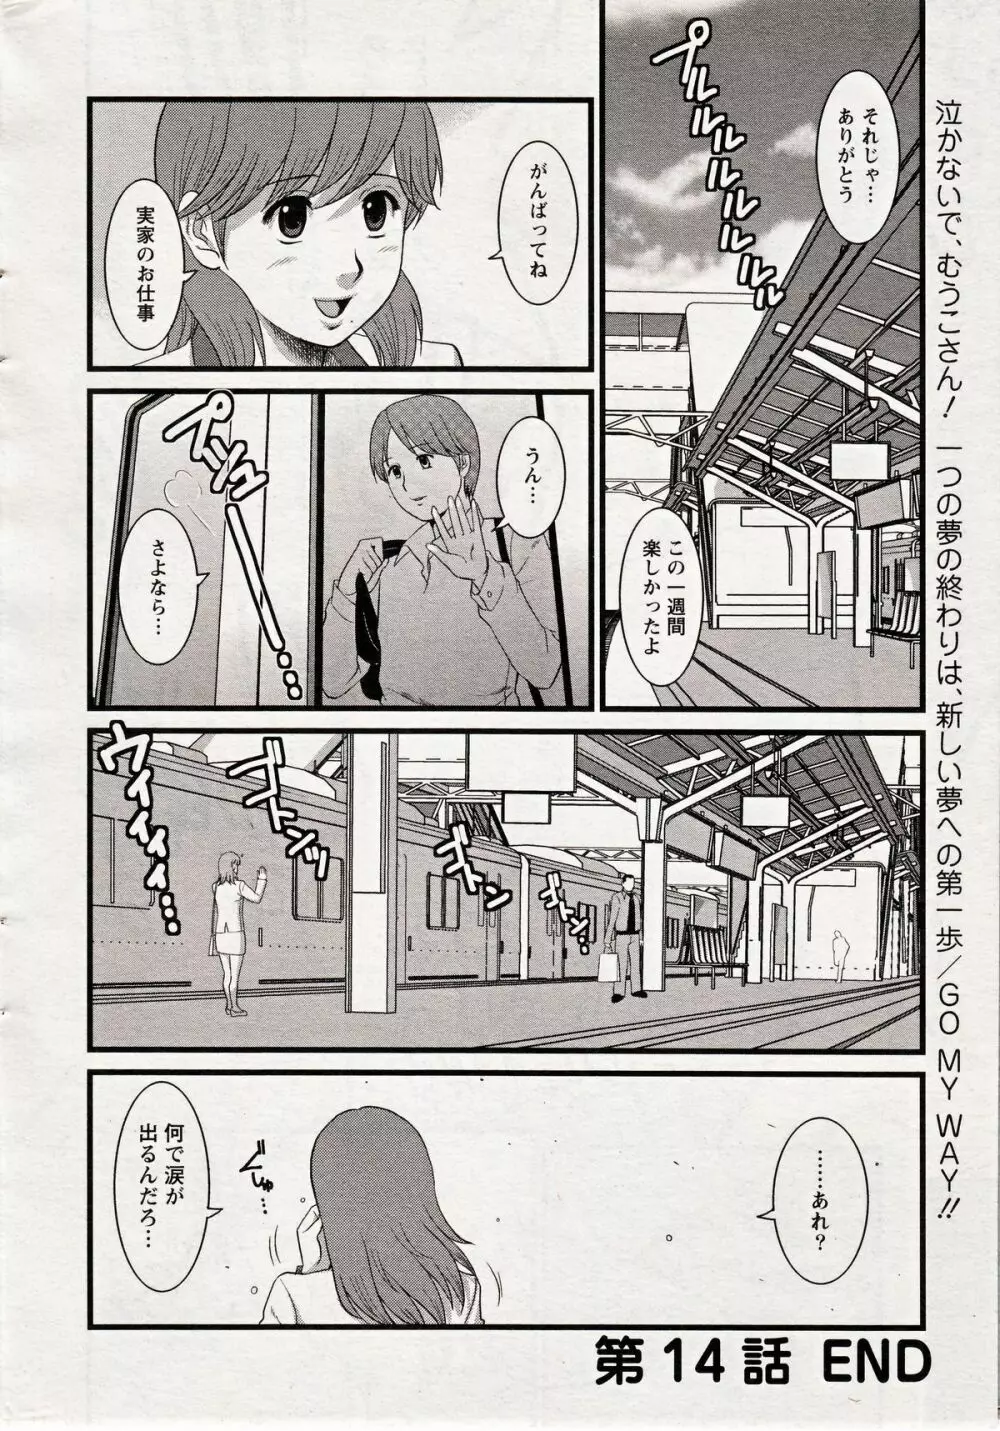 Haken no Muuko-san 14 20ページ